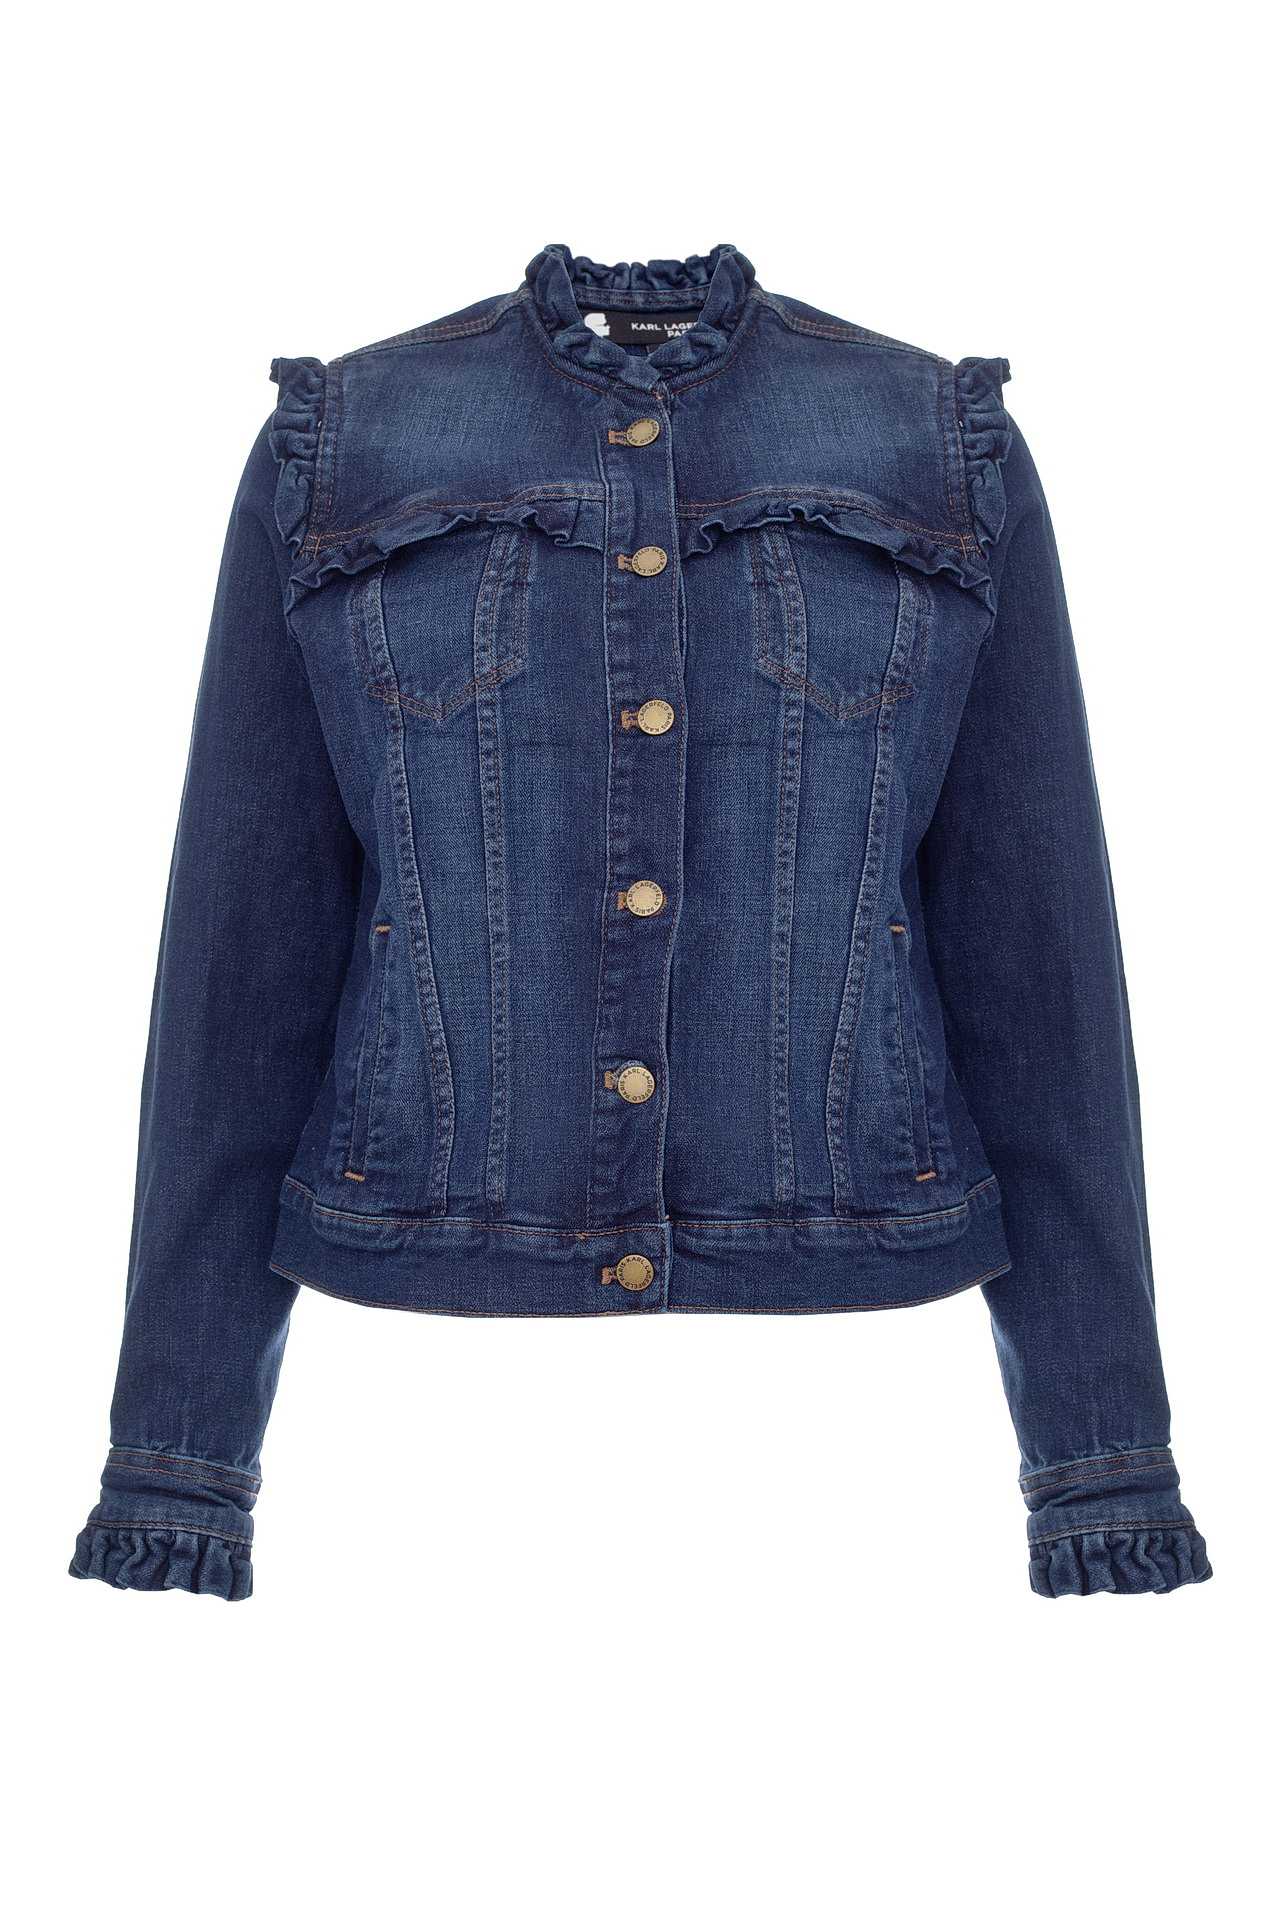 Одежда женская Куртка KARL LAGERFELD (L8TC0149/18.1). Купить за 12900 руб.